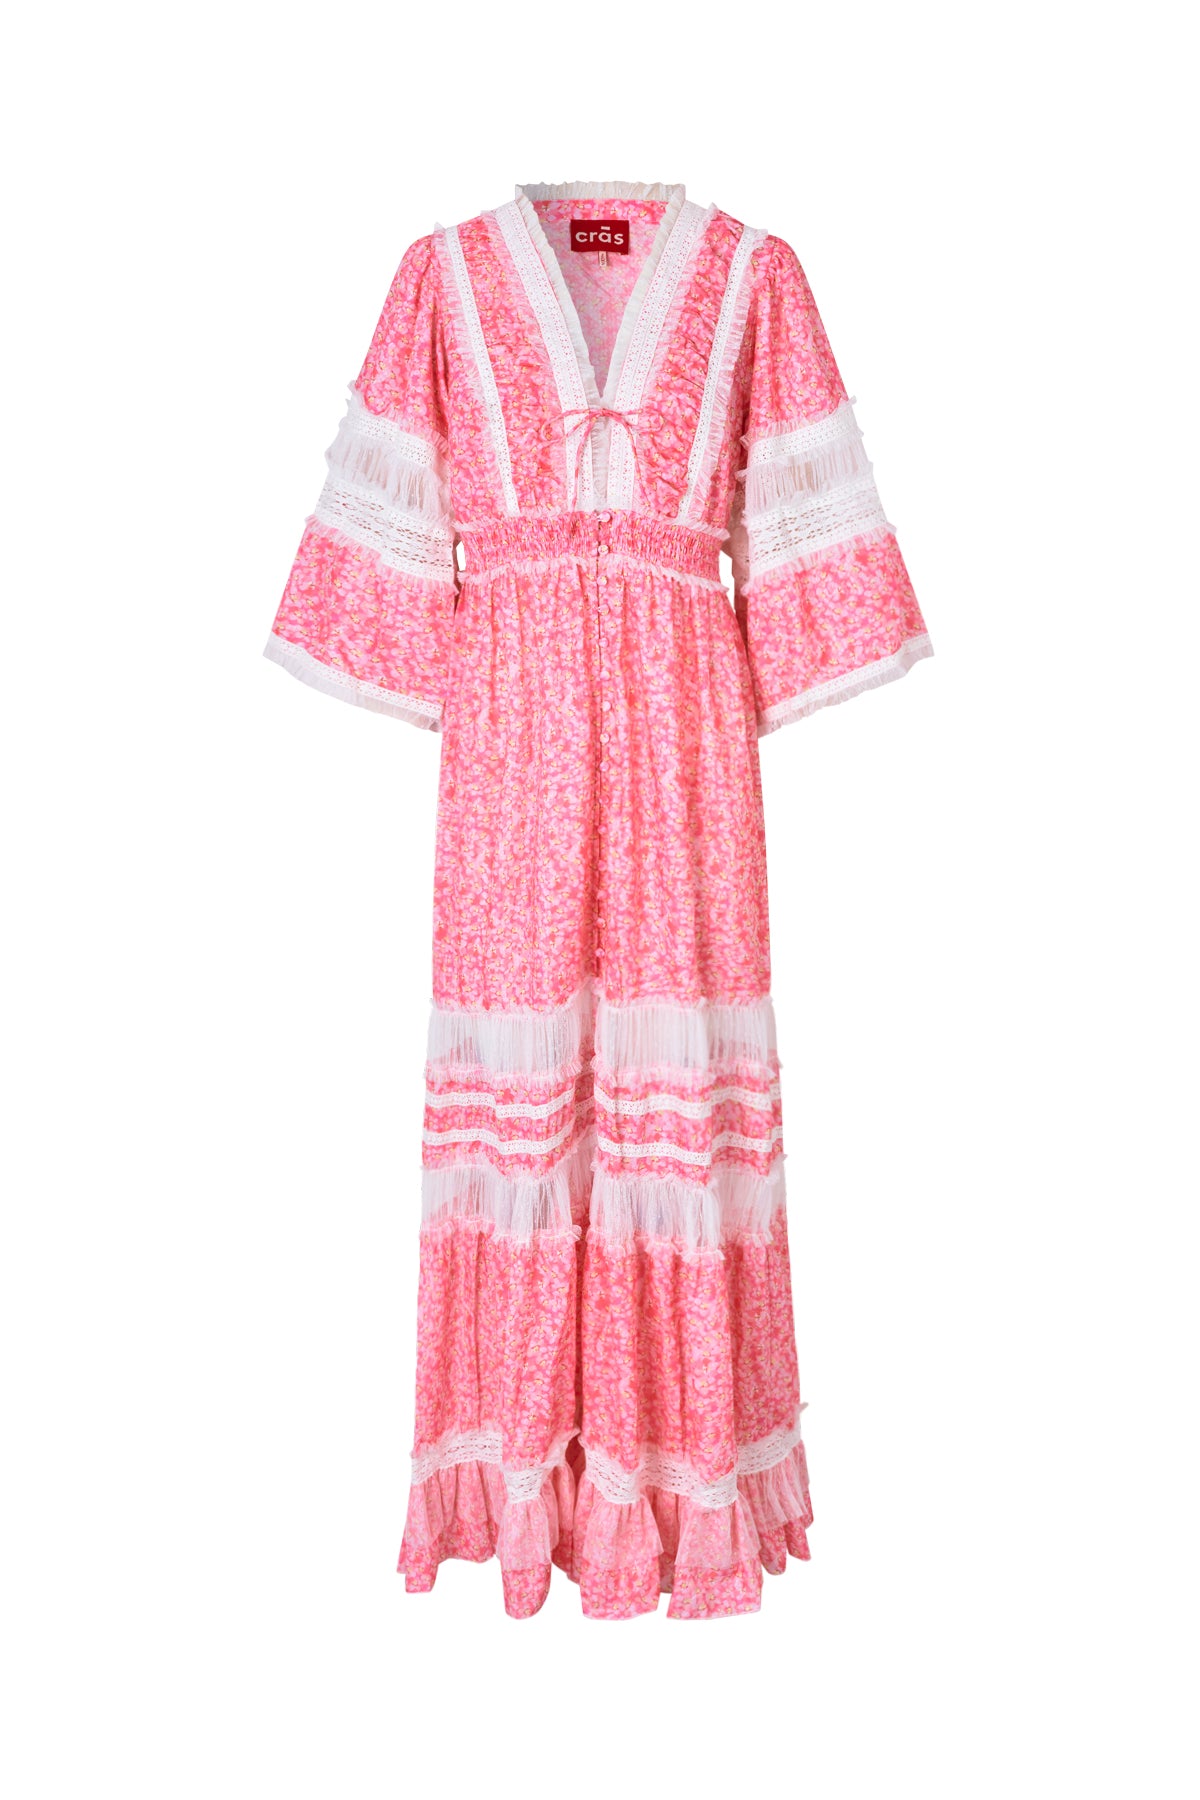 CRAS Mabel Dress Dress 8010 Seer Pink